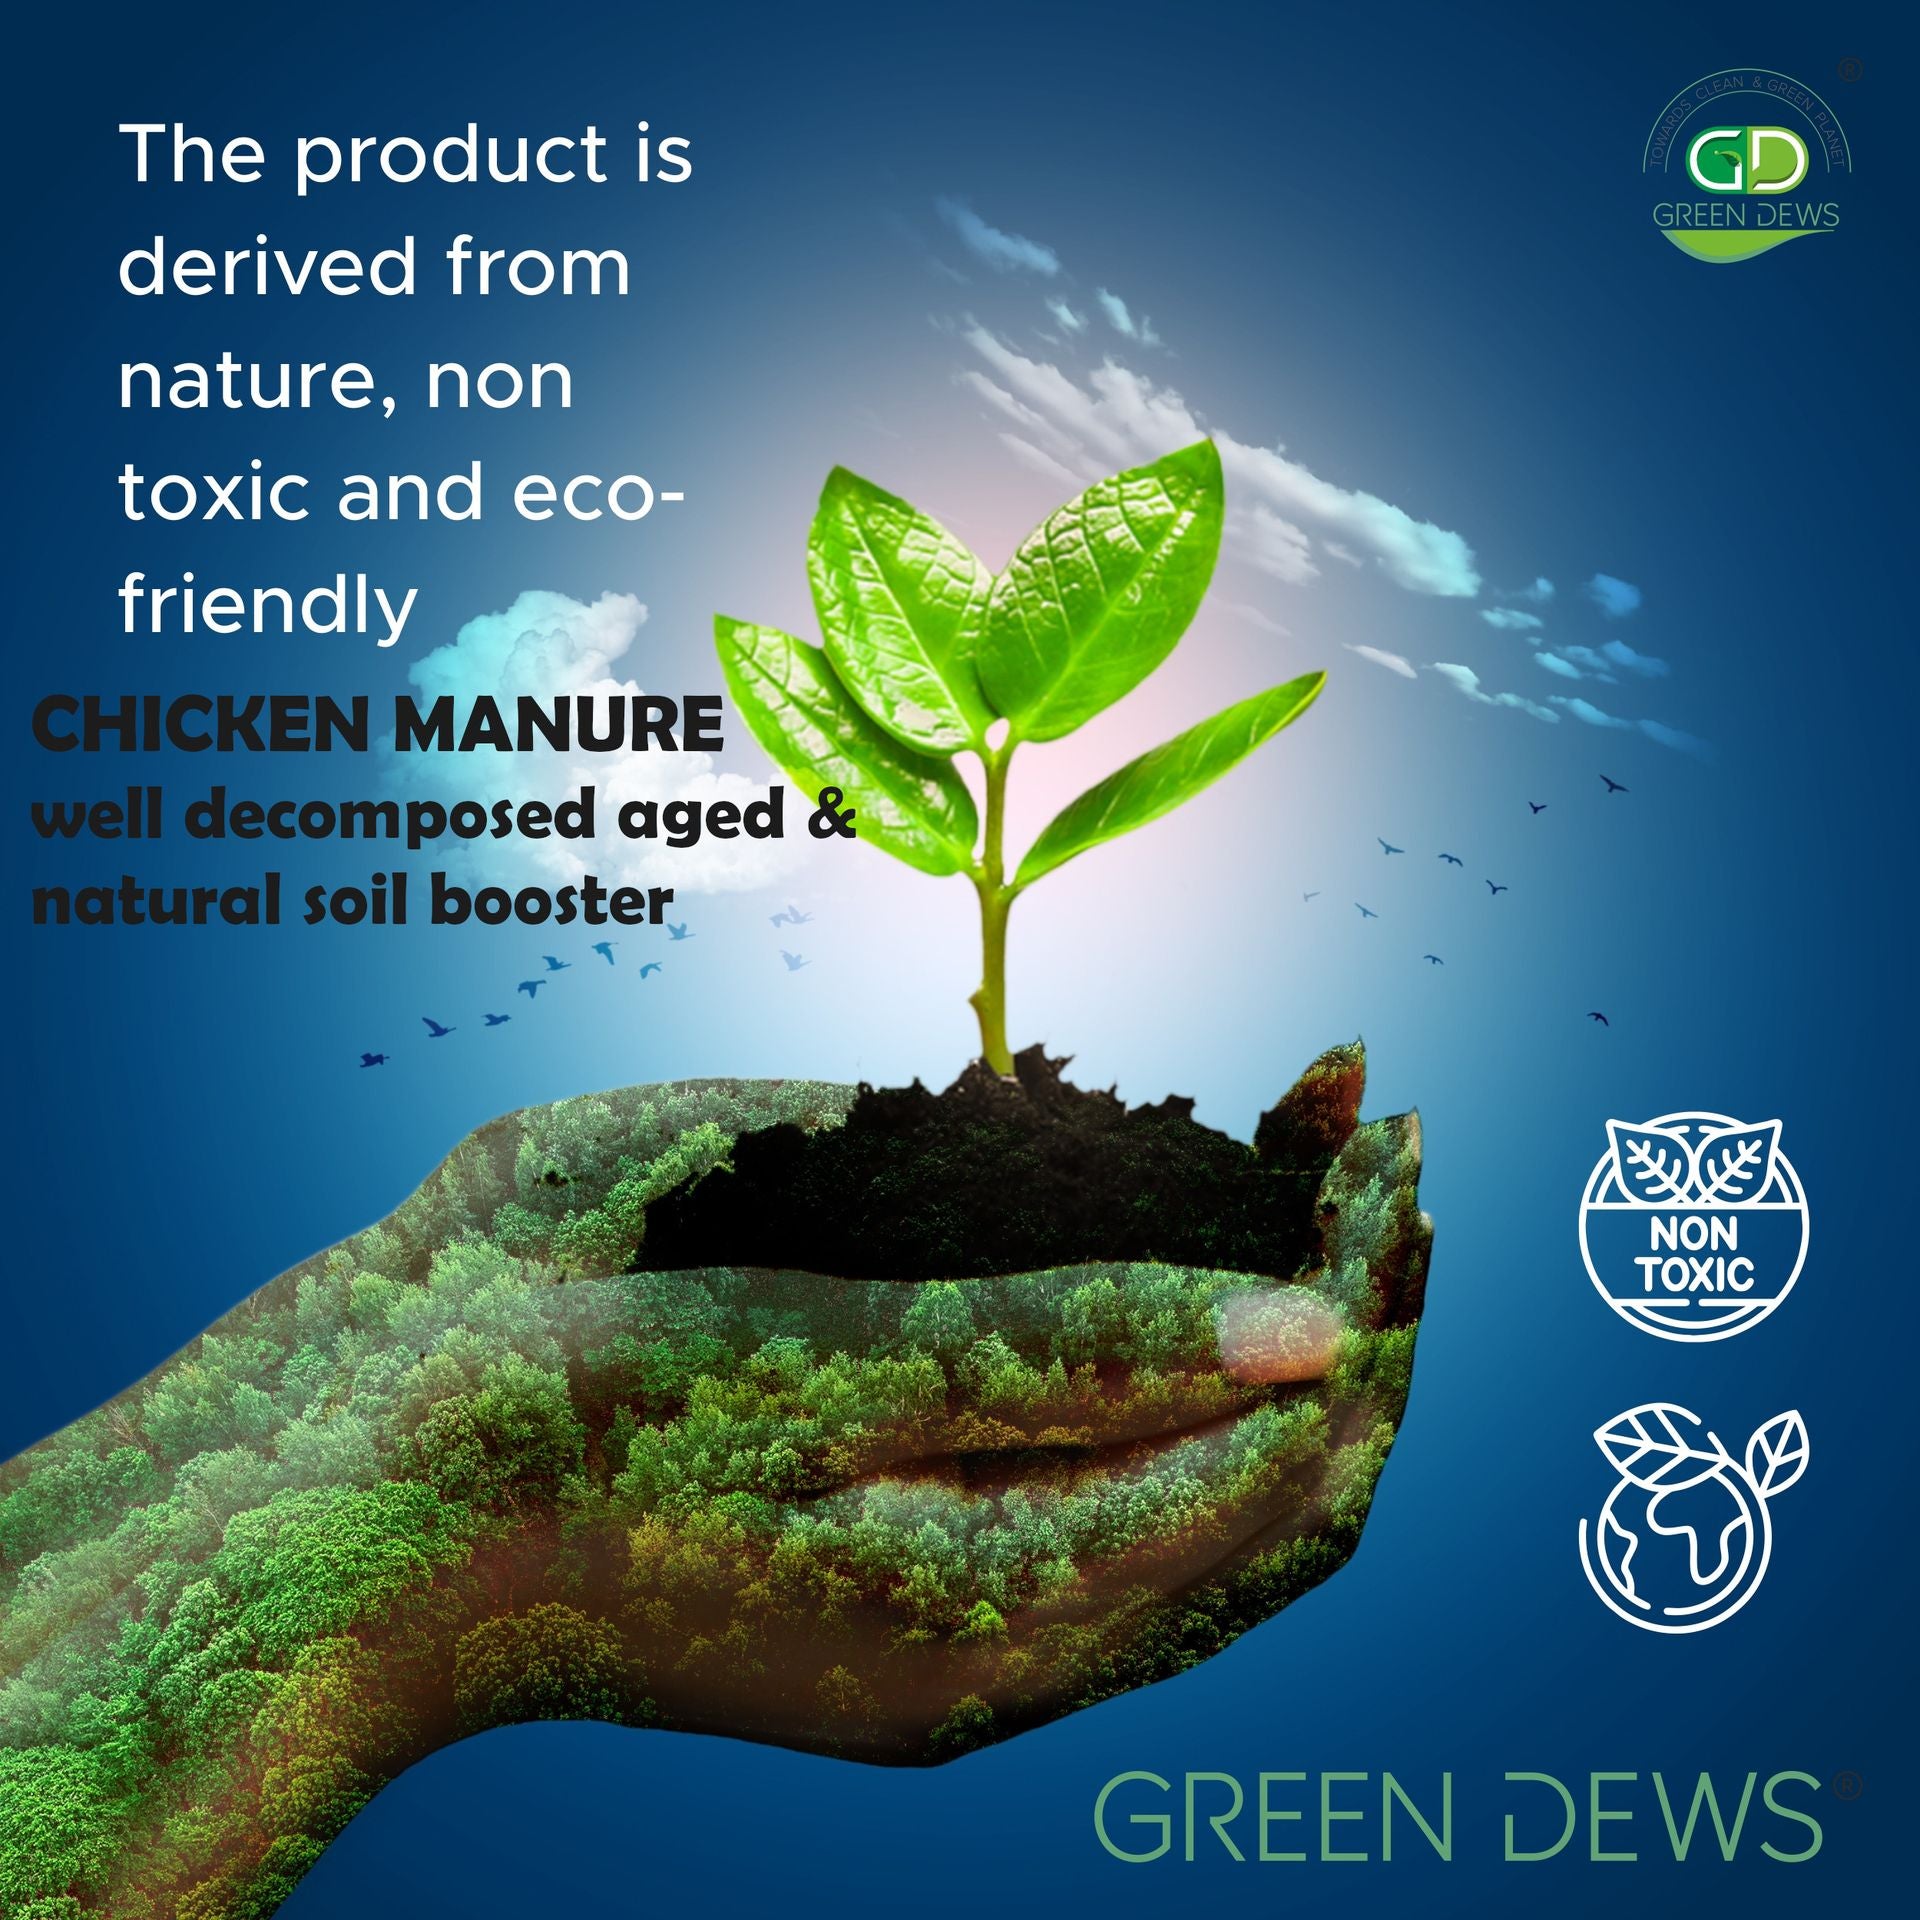 Green Dews Poultry Manure Chicken Manure Compost Fertilizer For Plants home garden - hfnl!fe